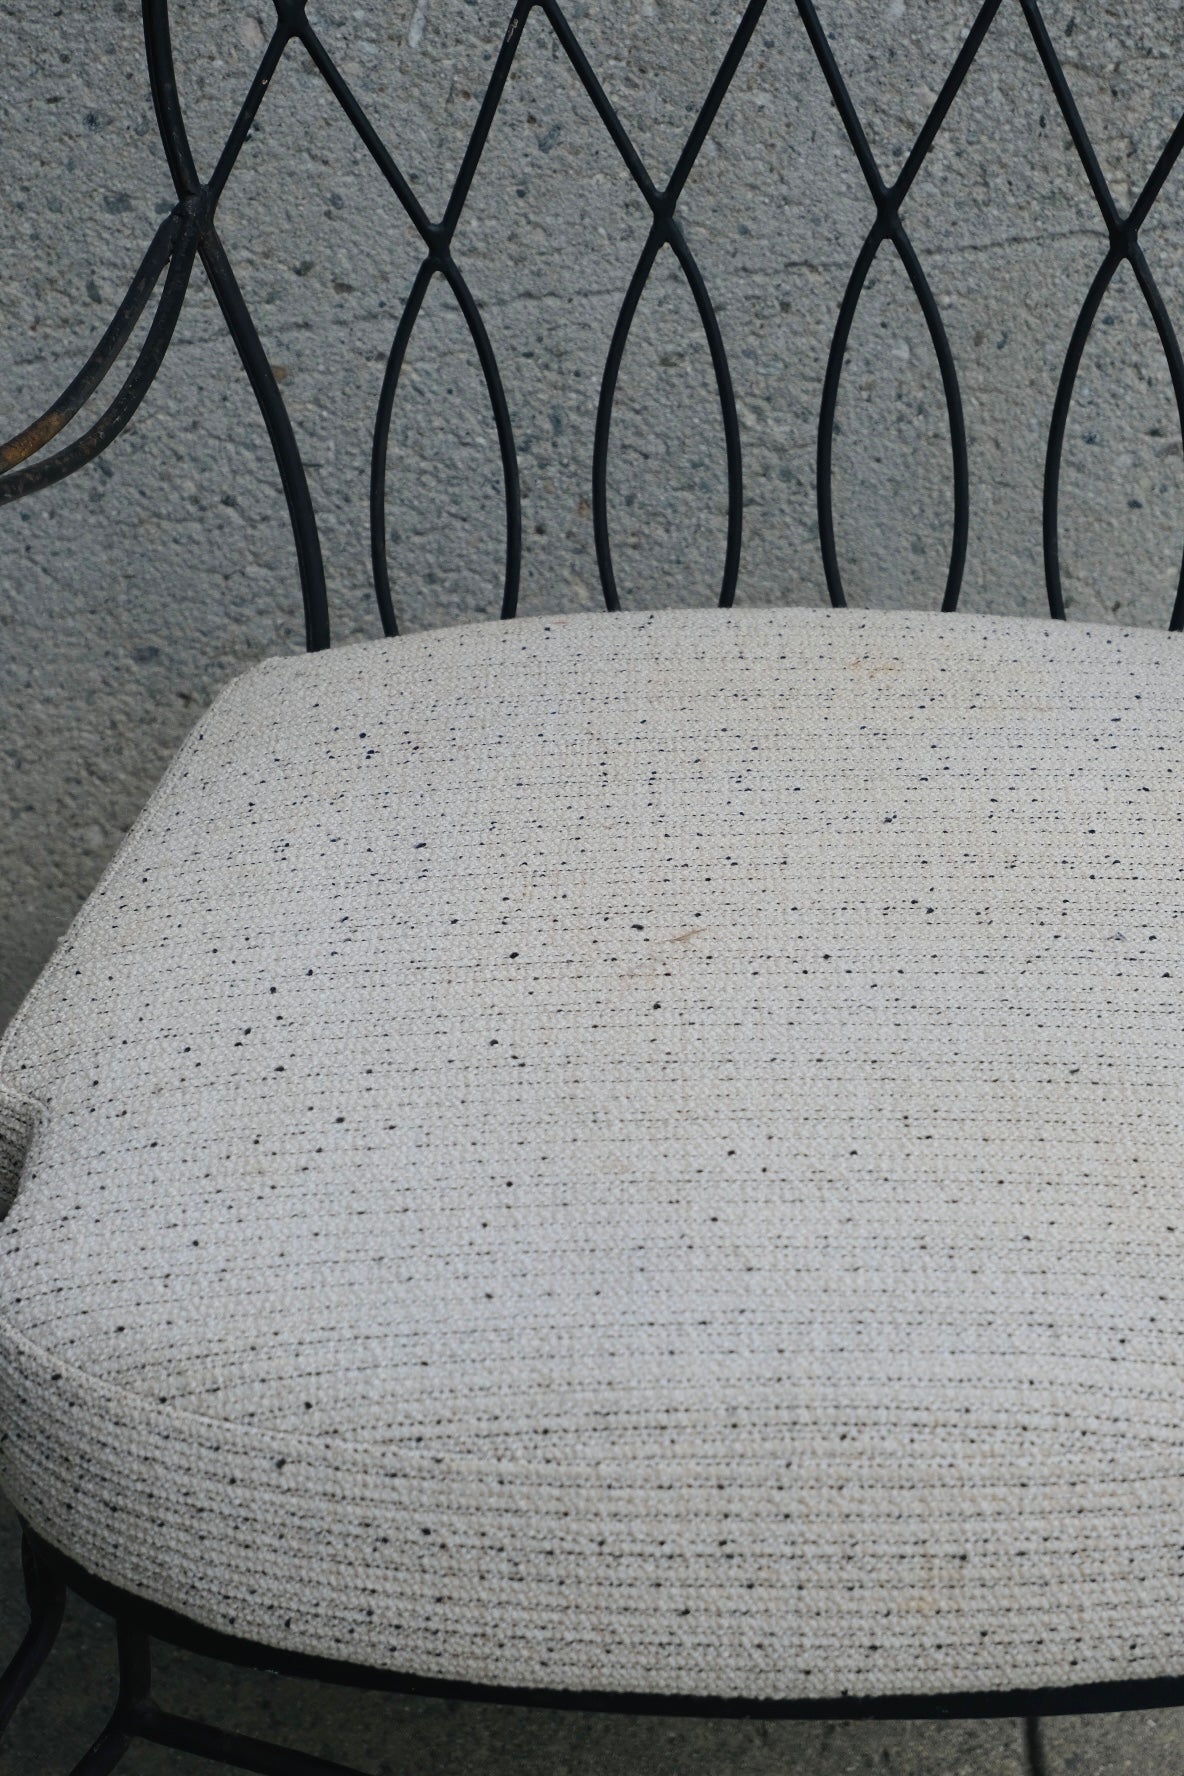 Curvy Wrought Iron Garden Chair (Vintage)